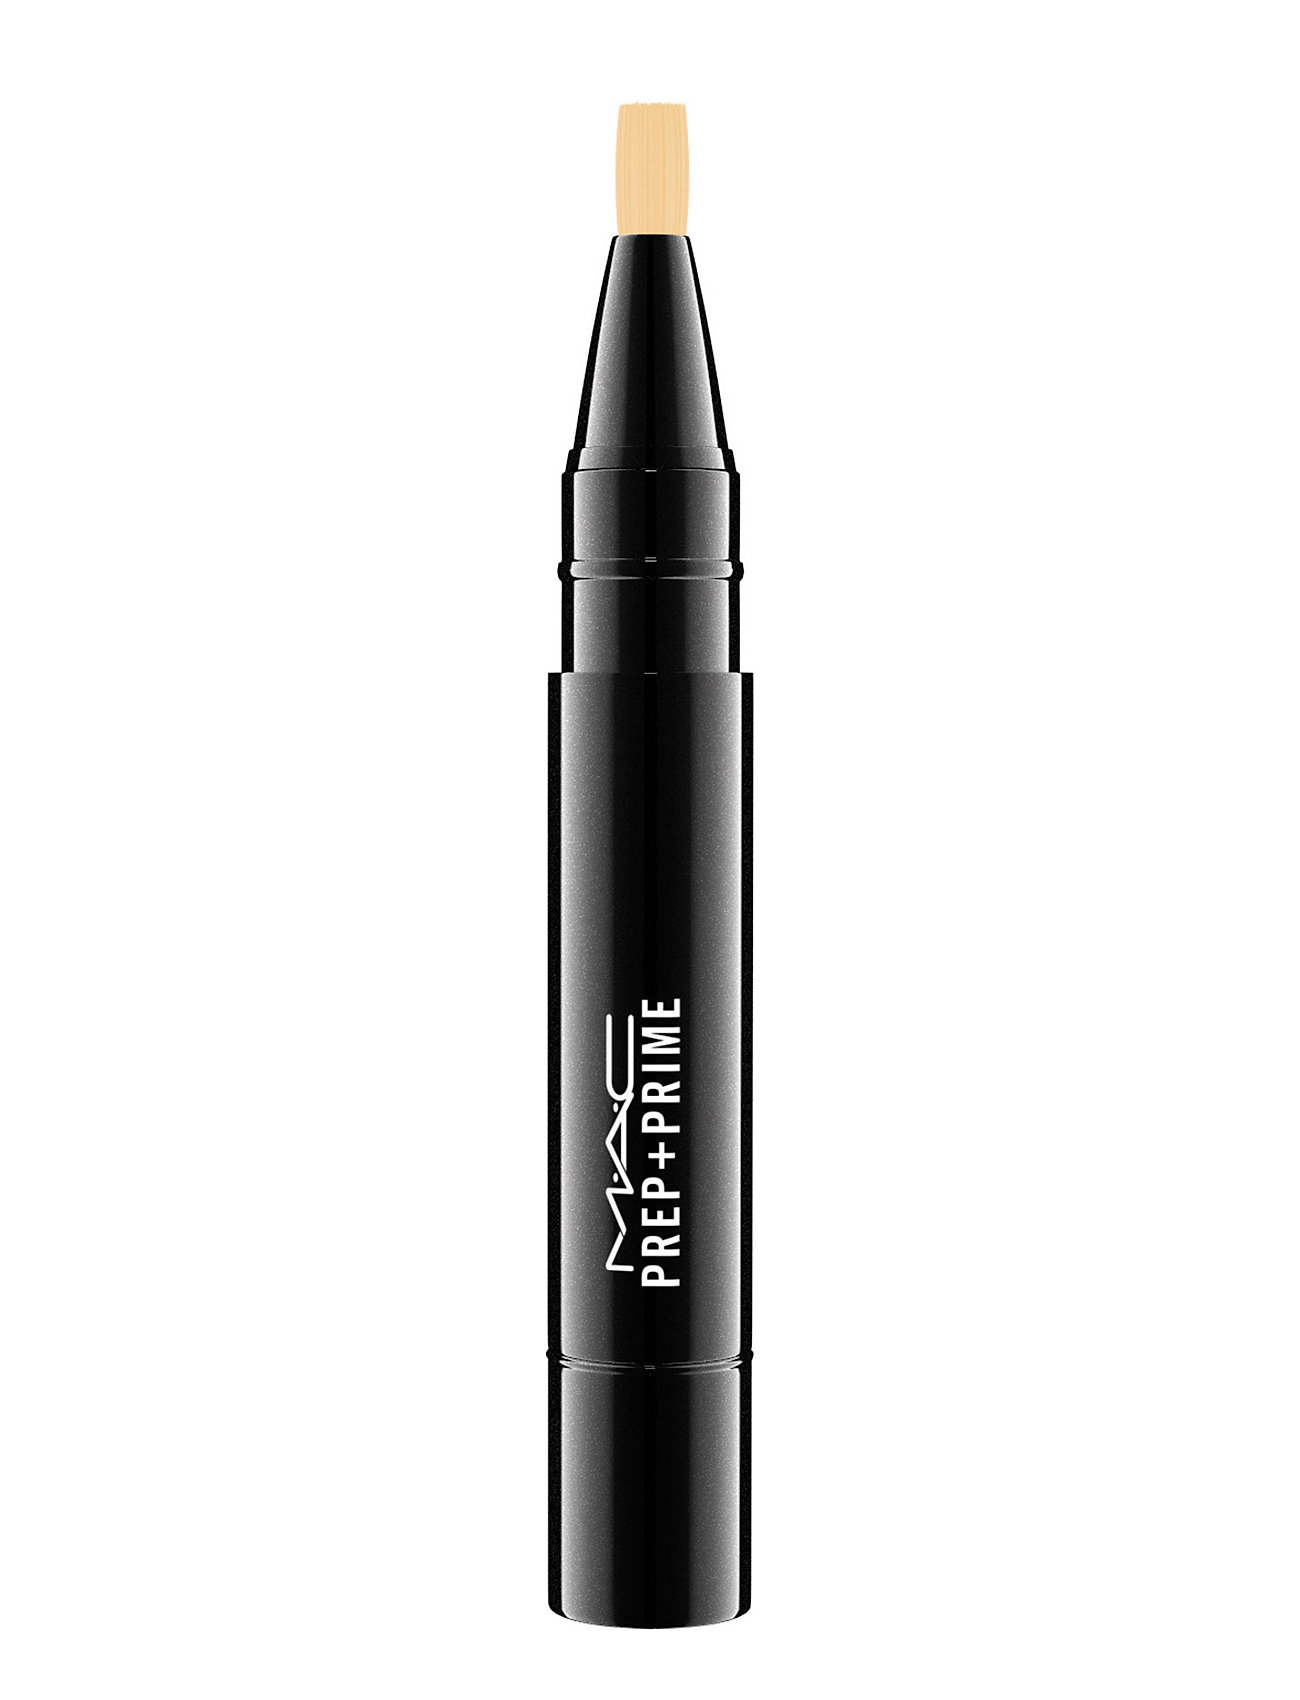 Prep + Prime Highlighter - Light Boost Highlighter Contour Makeup Multi/patterned MAC